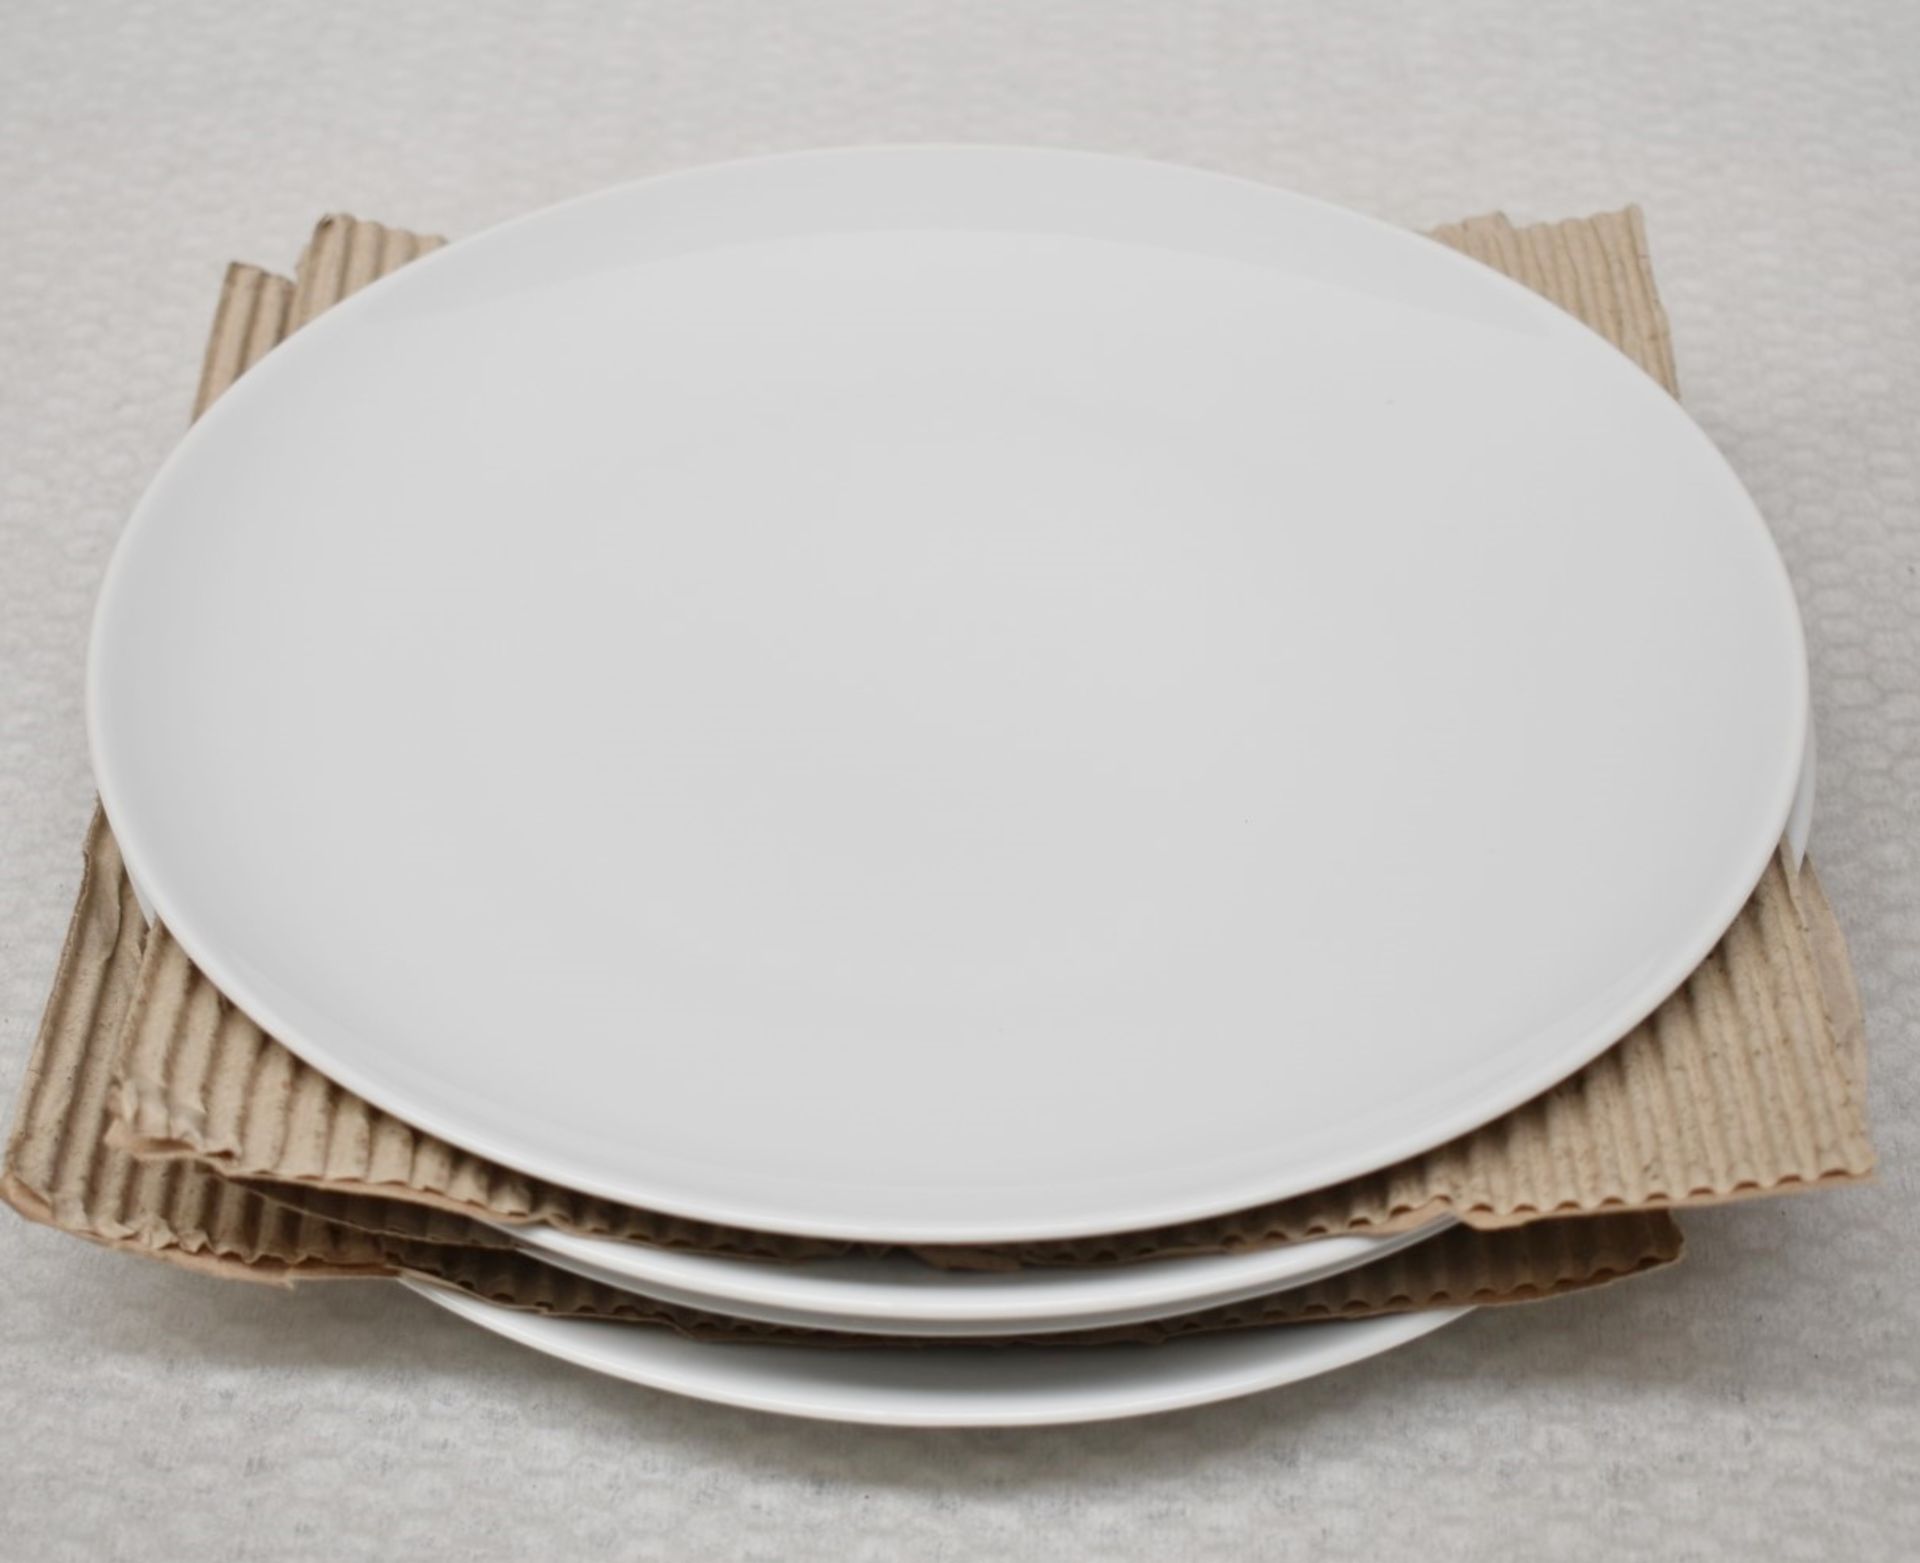 1 x LSA INTERNATIONAL 'Dine' Porcelain 15-Piece Tableware Assortment (No Bowls) - RRP £100.00 - Image 5 of 14